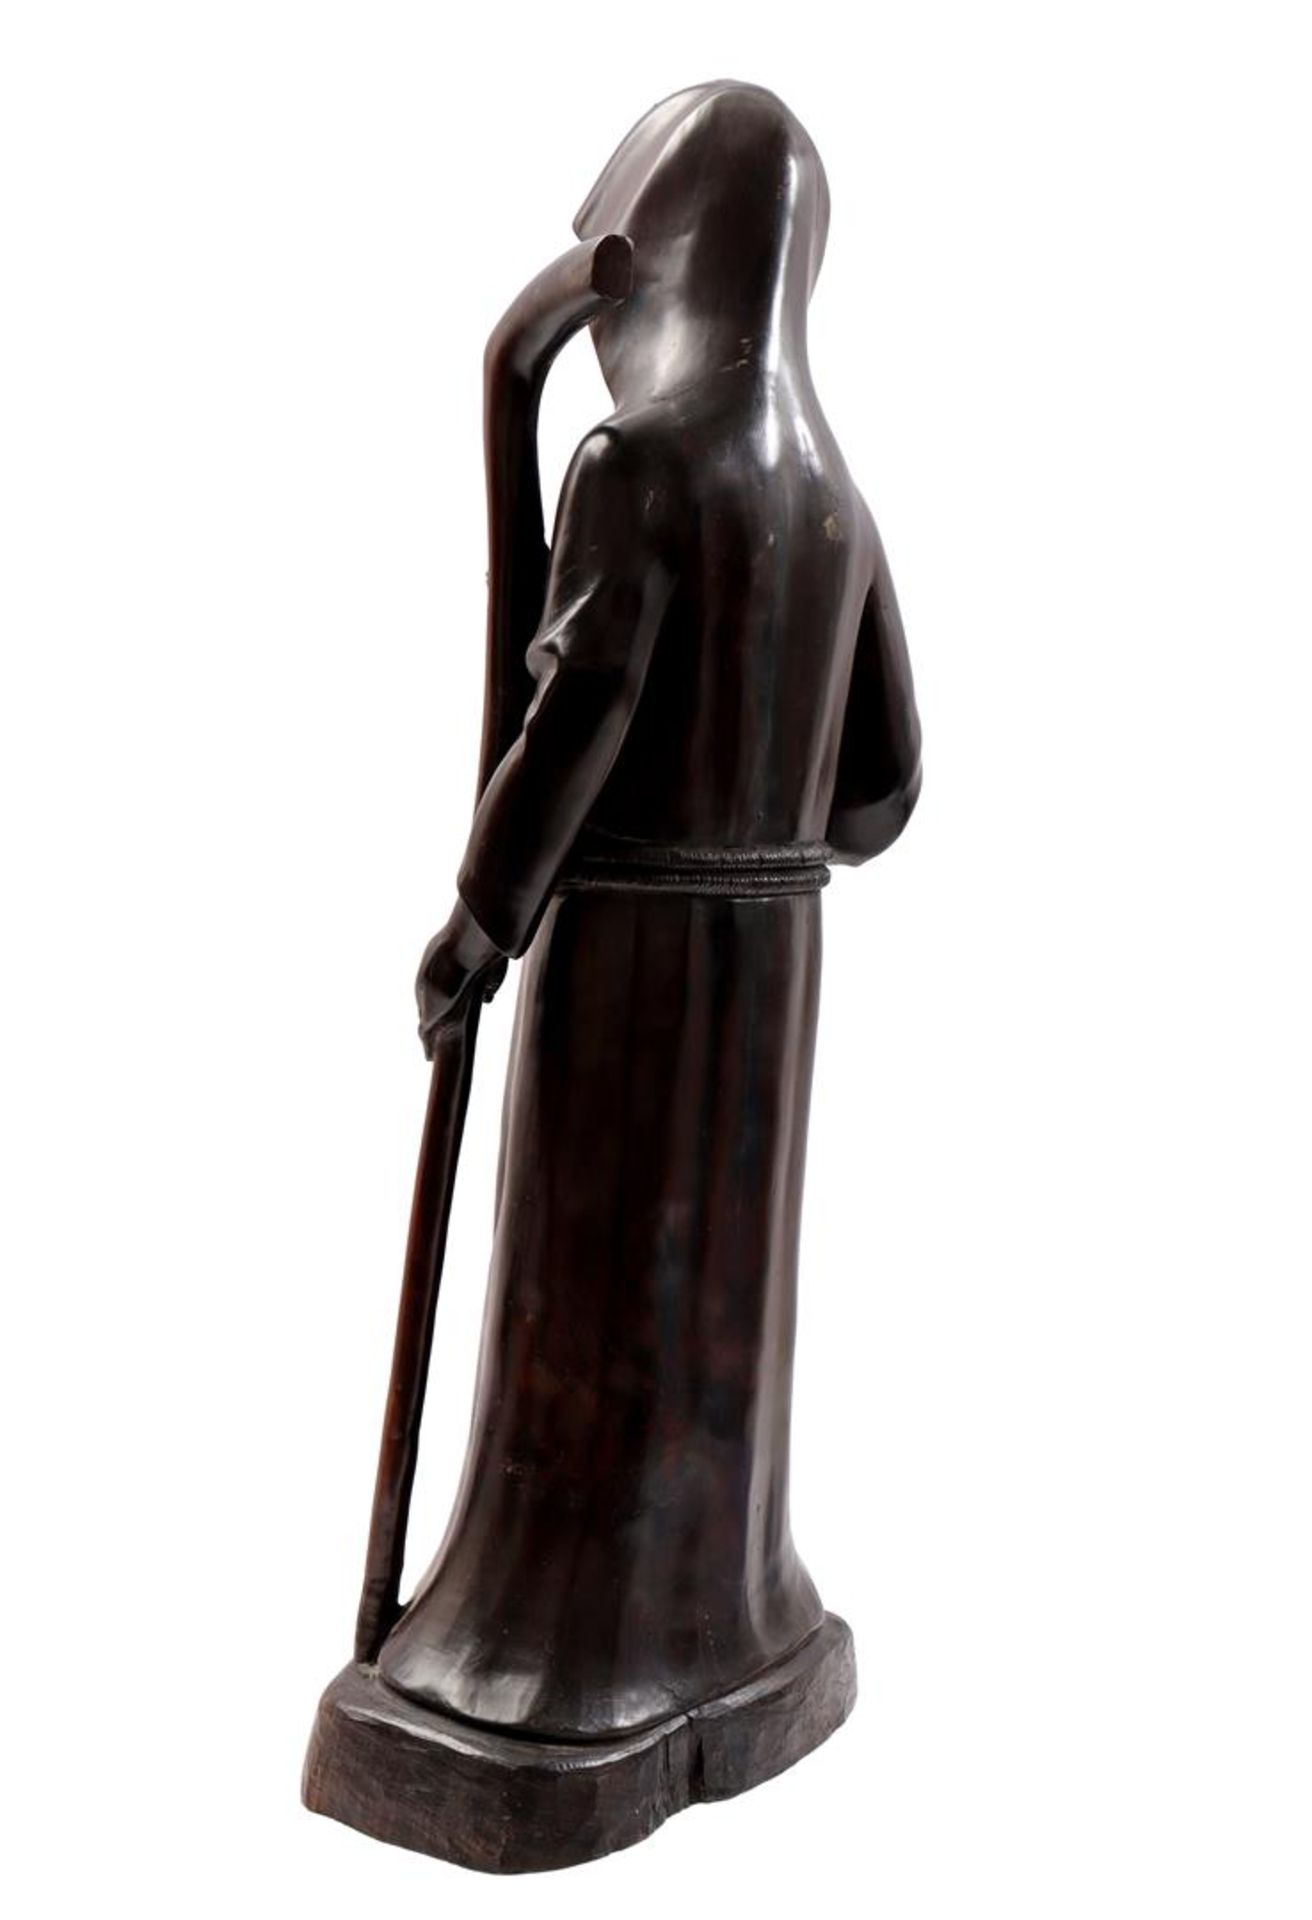 Coromandel wooden statue - Image 8 of 10